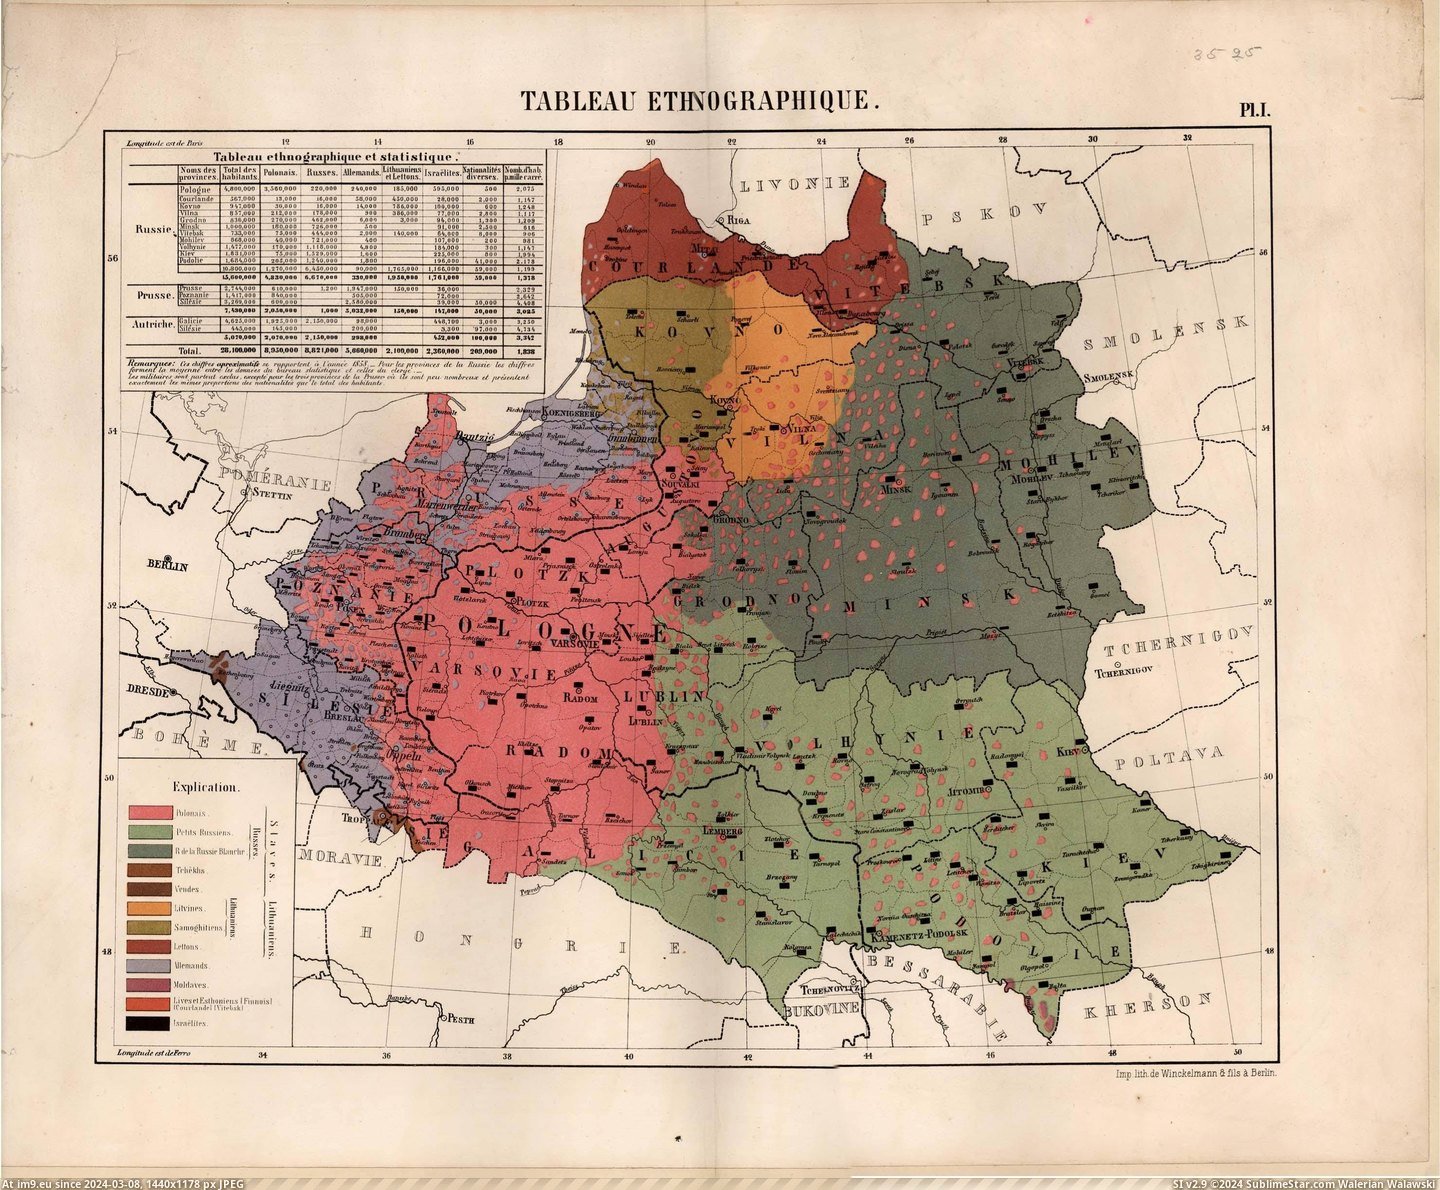 #Map #Poland #Partitioned #Statistics #Ethnographic [Mapporn] Ethnographic Map and Statistics of Partitioned Poland, 1858 [2959×2432] Pic. (Изображение из альбом My r/MAPS favs))